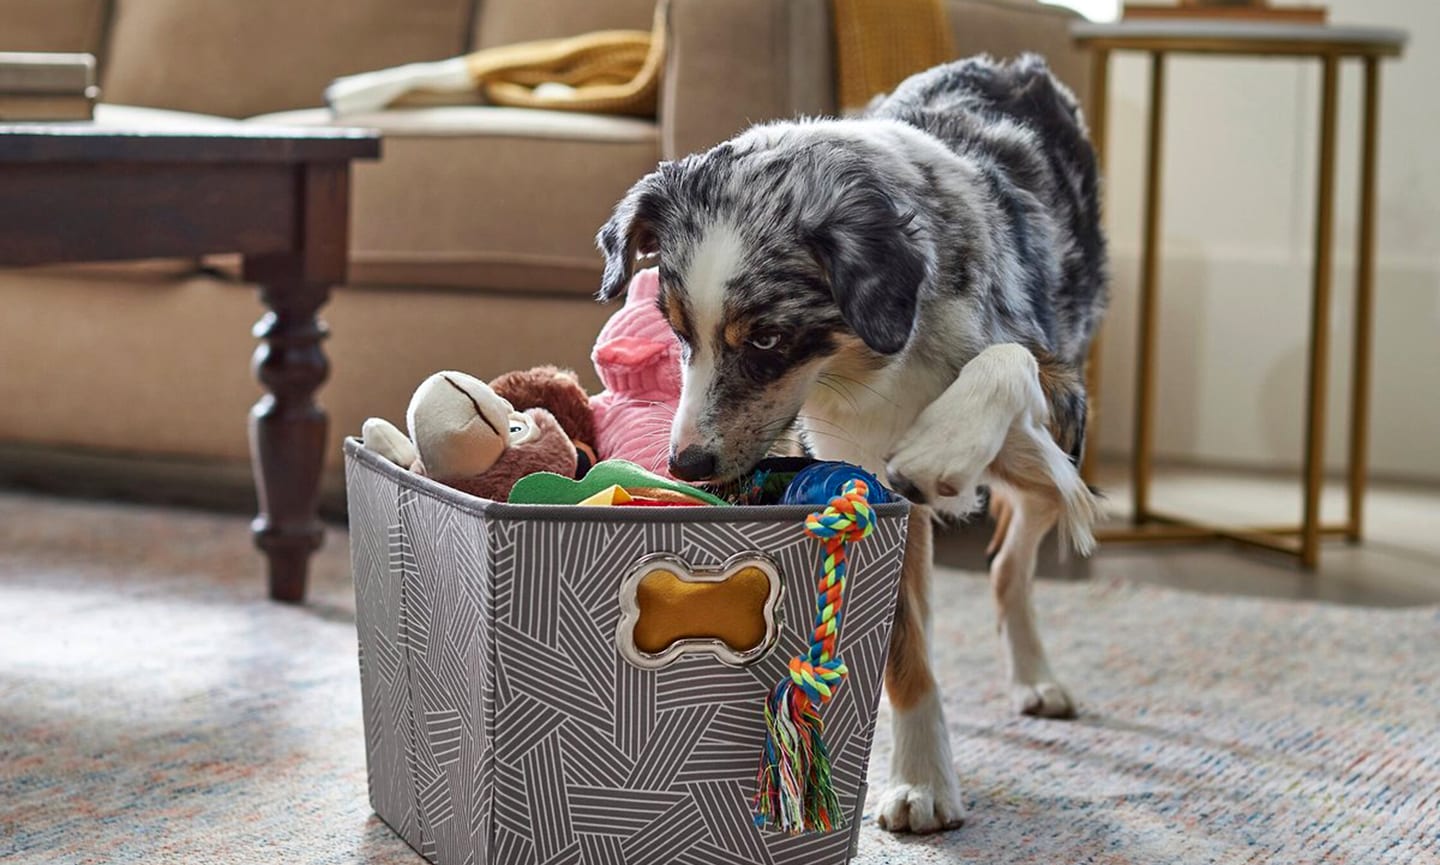 Home Storage Bin Organizer Box Personalized Dog Toy Basket with Handle